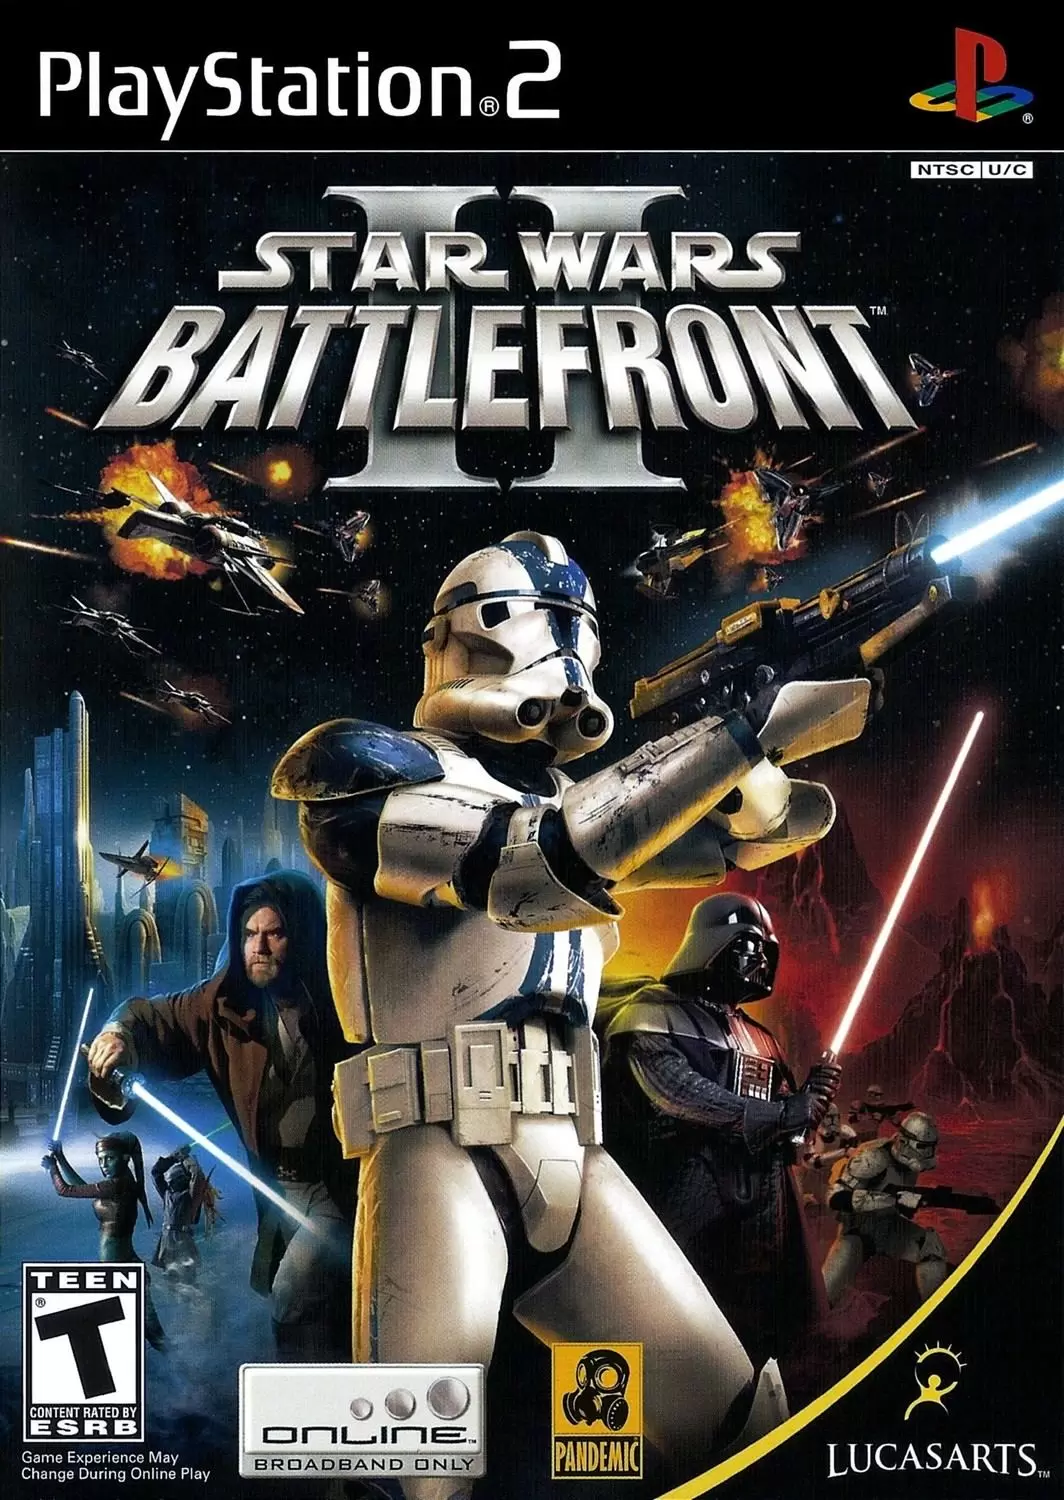 PS2 Games - Star Wars: Battlefront II